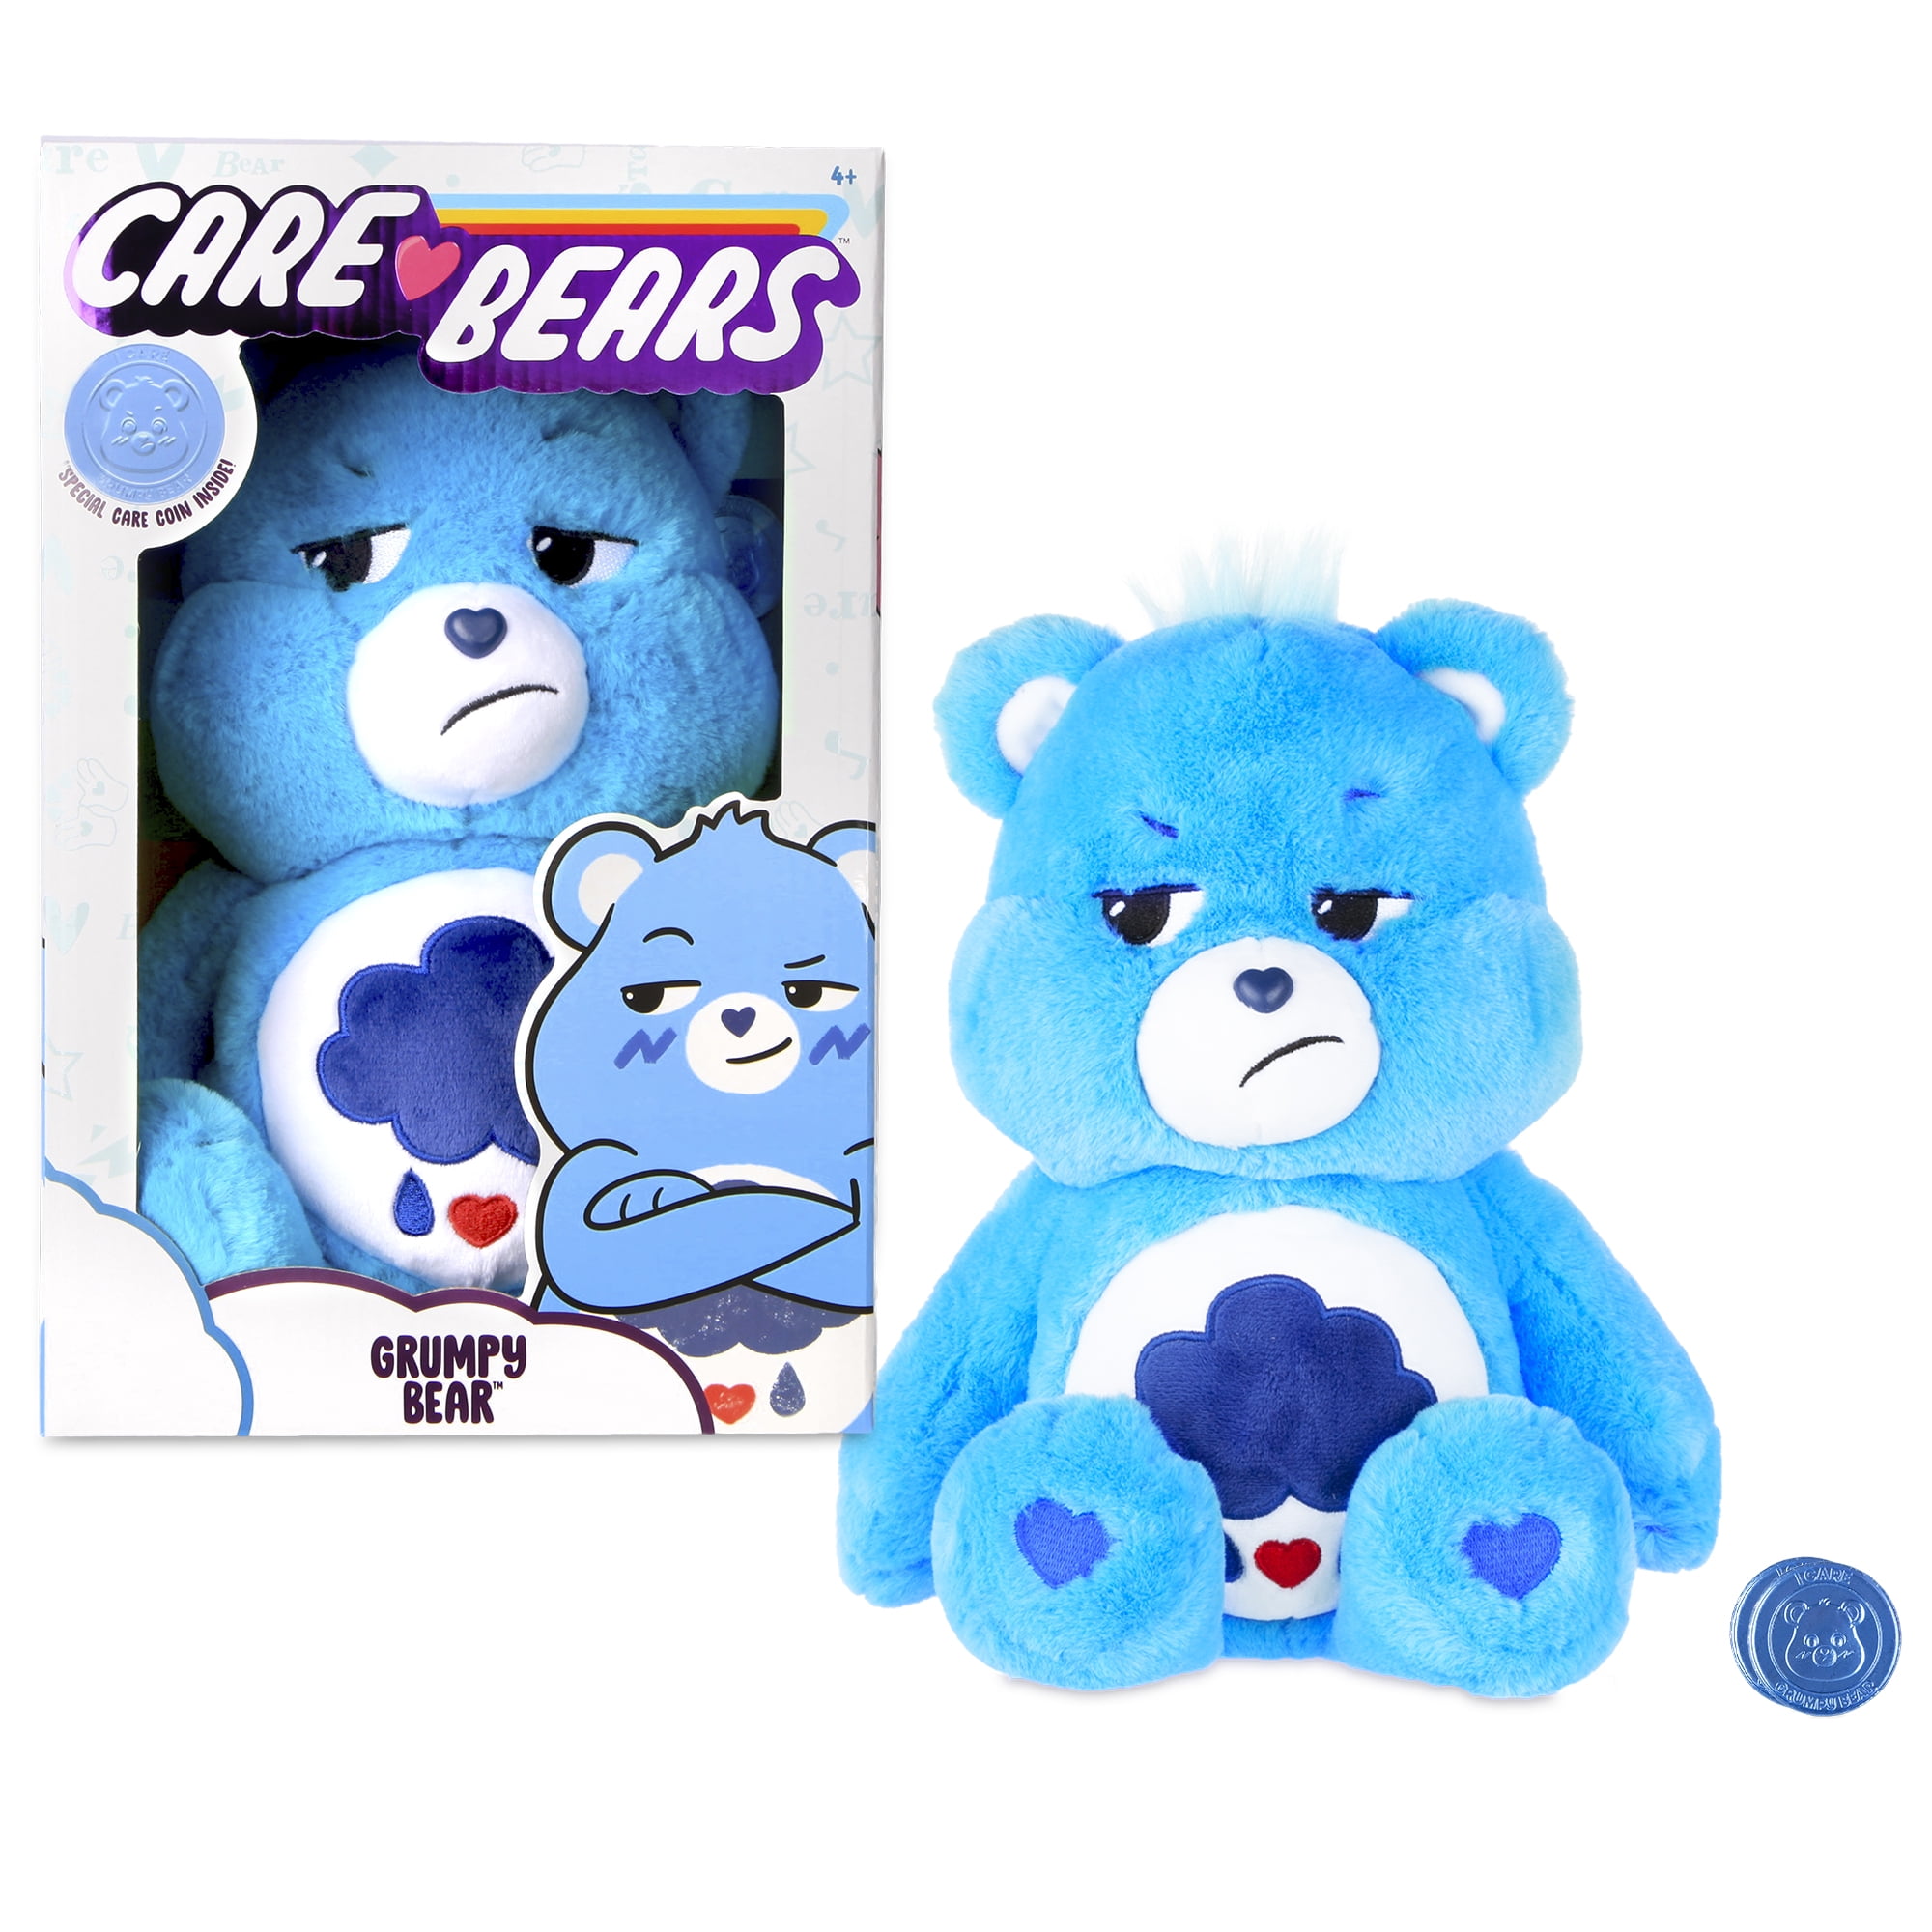 care bears plush